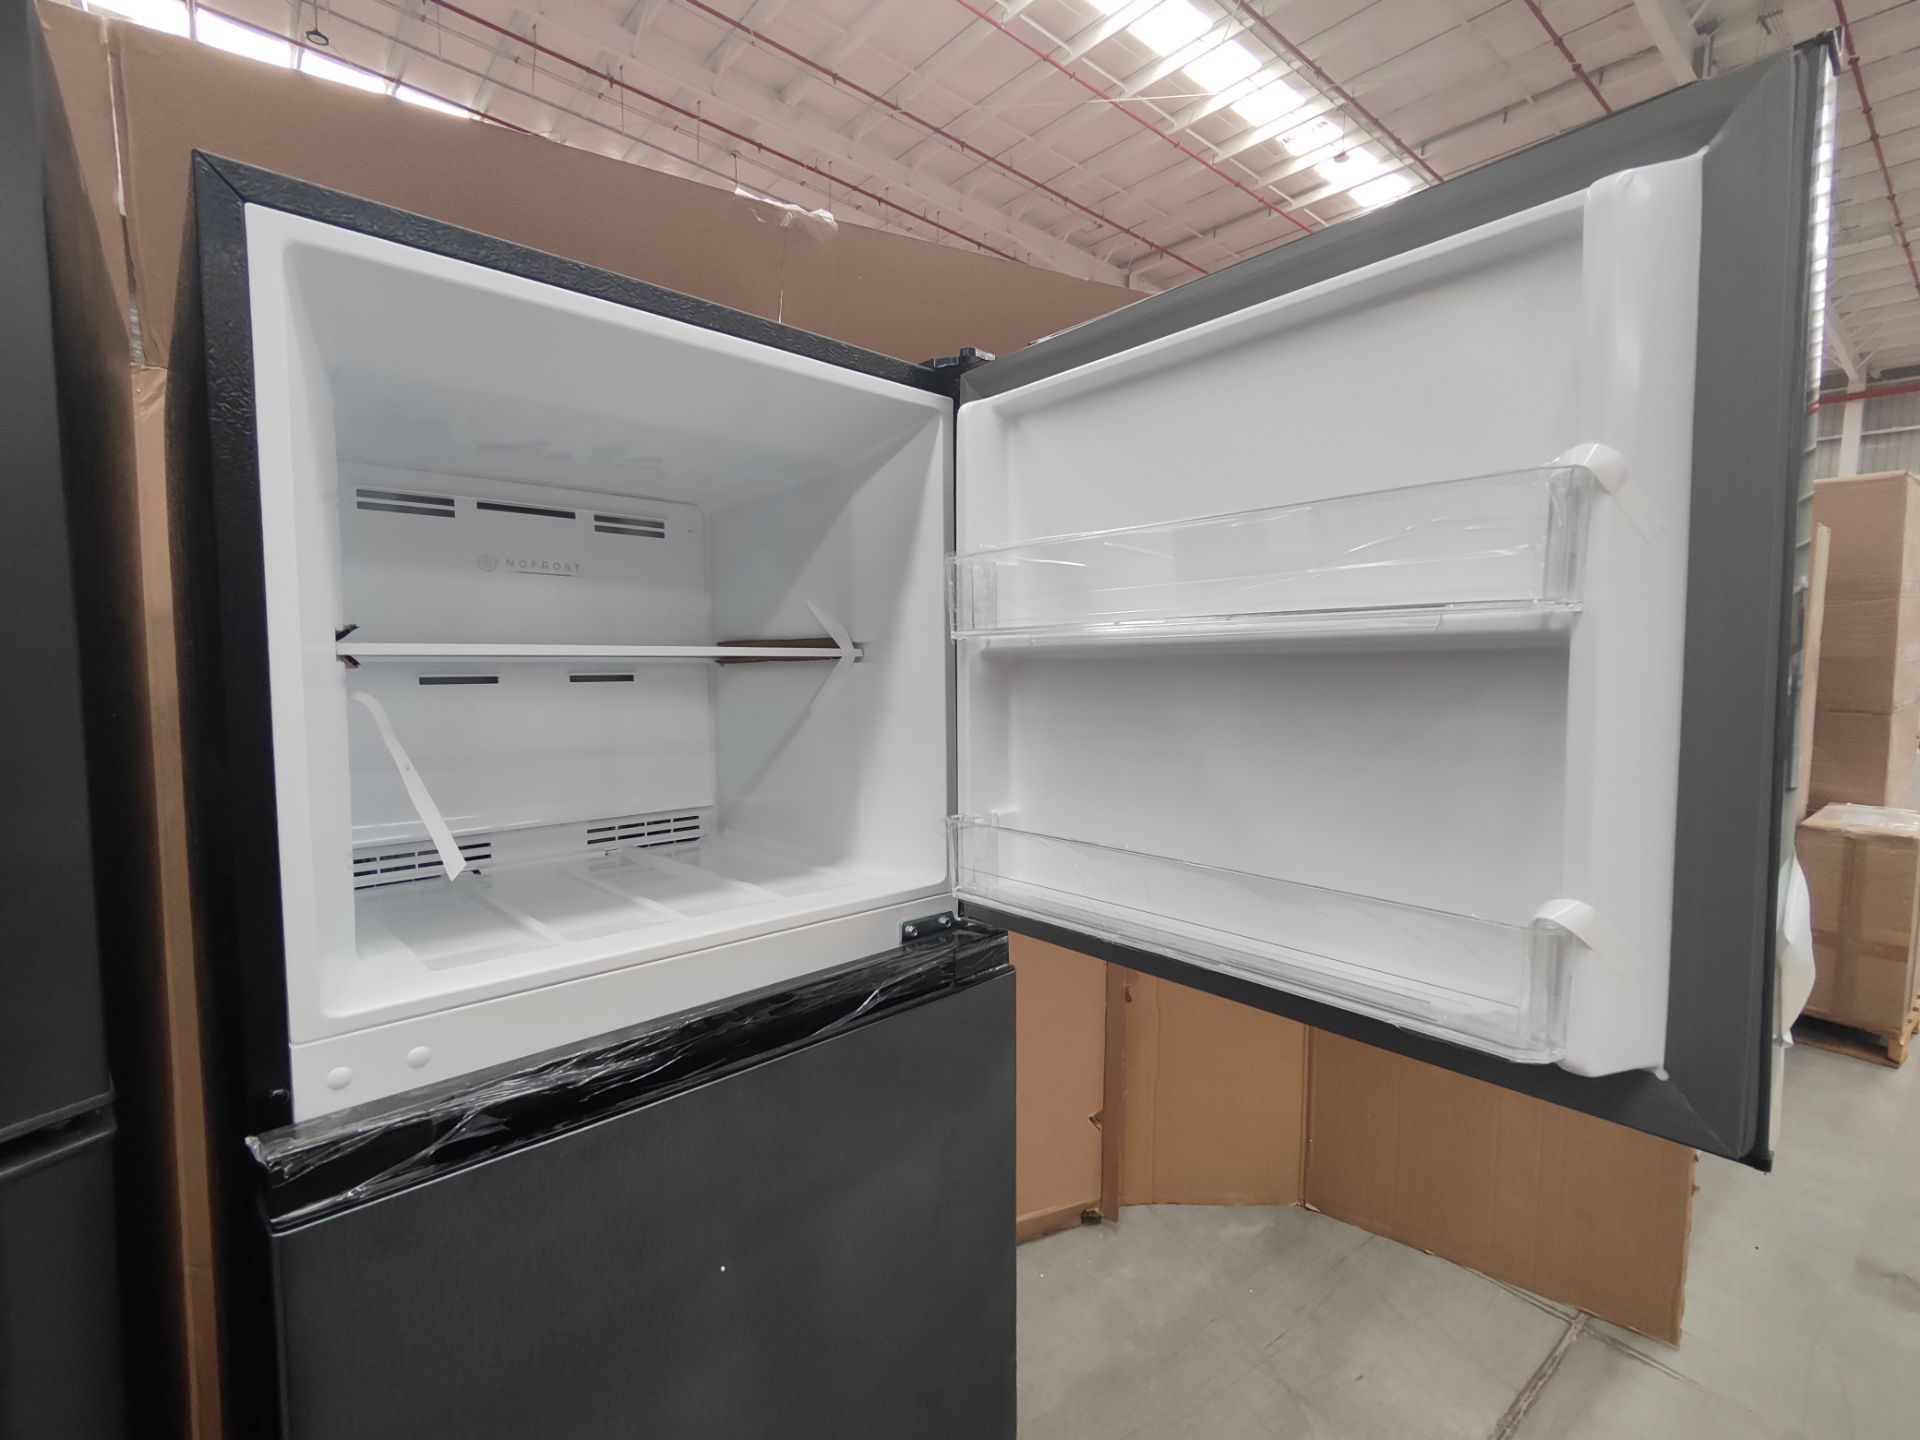 Lote de 2 Refrigeradores contine: 1 Refrigerador Marca Mabe, Modelo RME360FDMRD0, Serie 822933, Col - Image 5 of 6